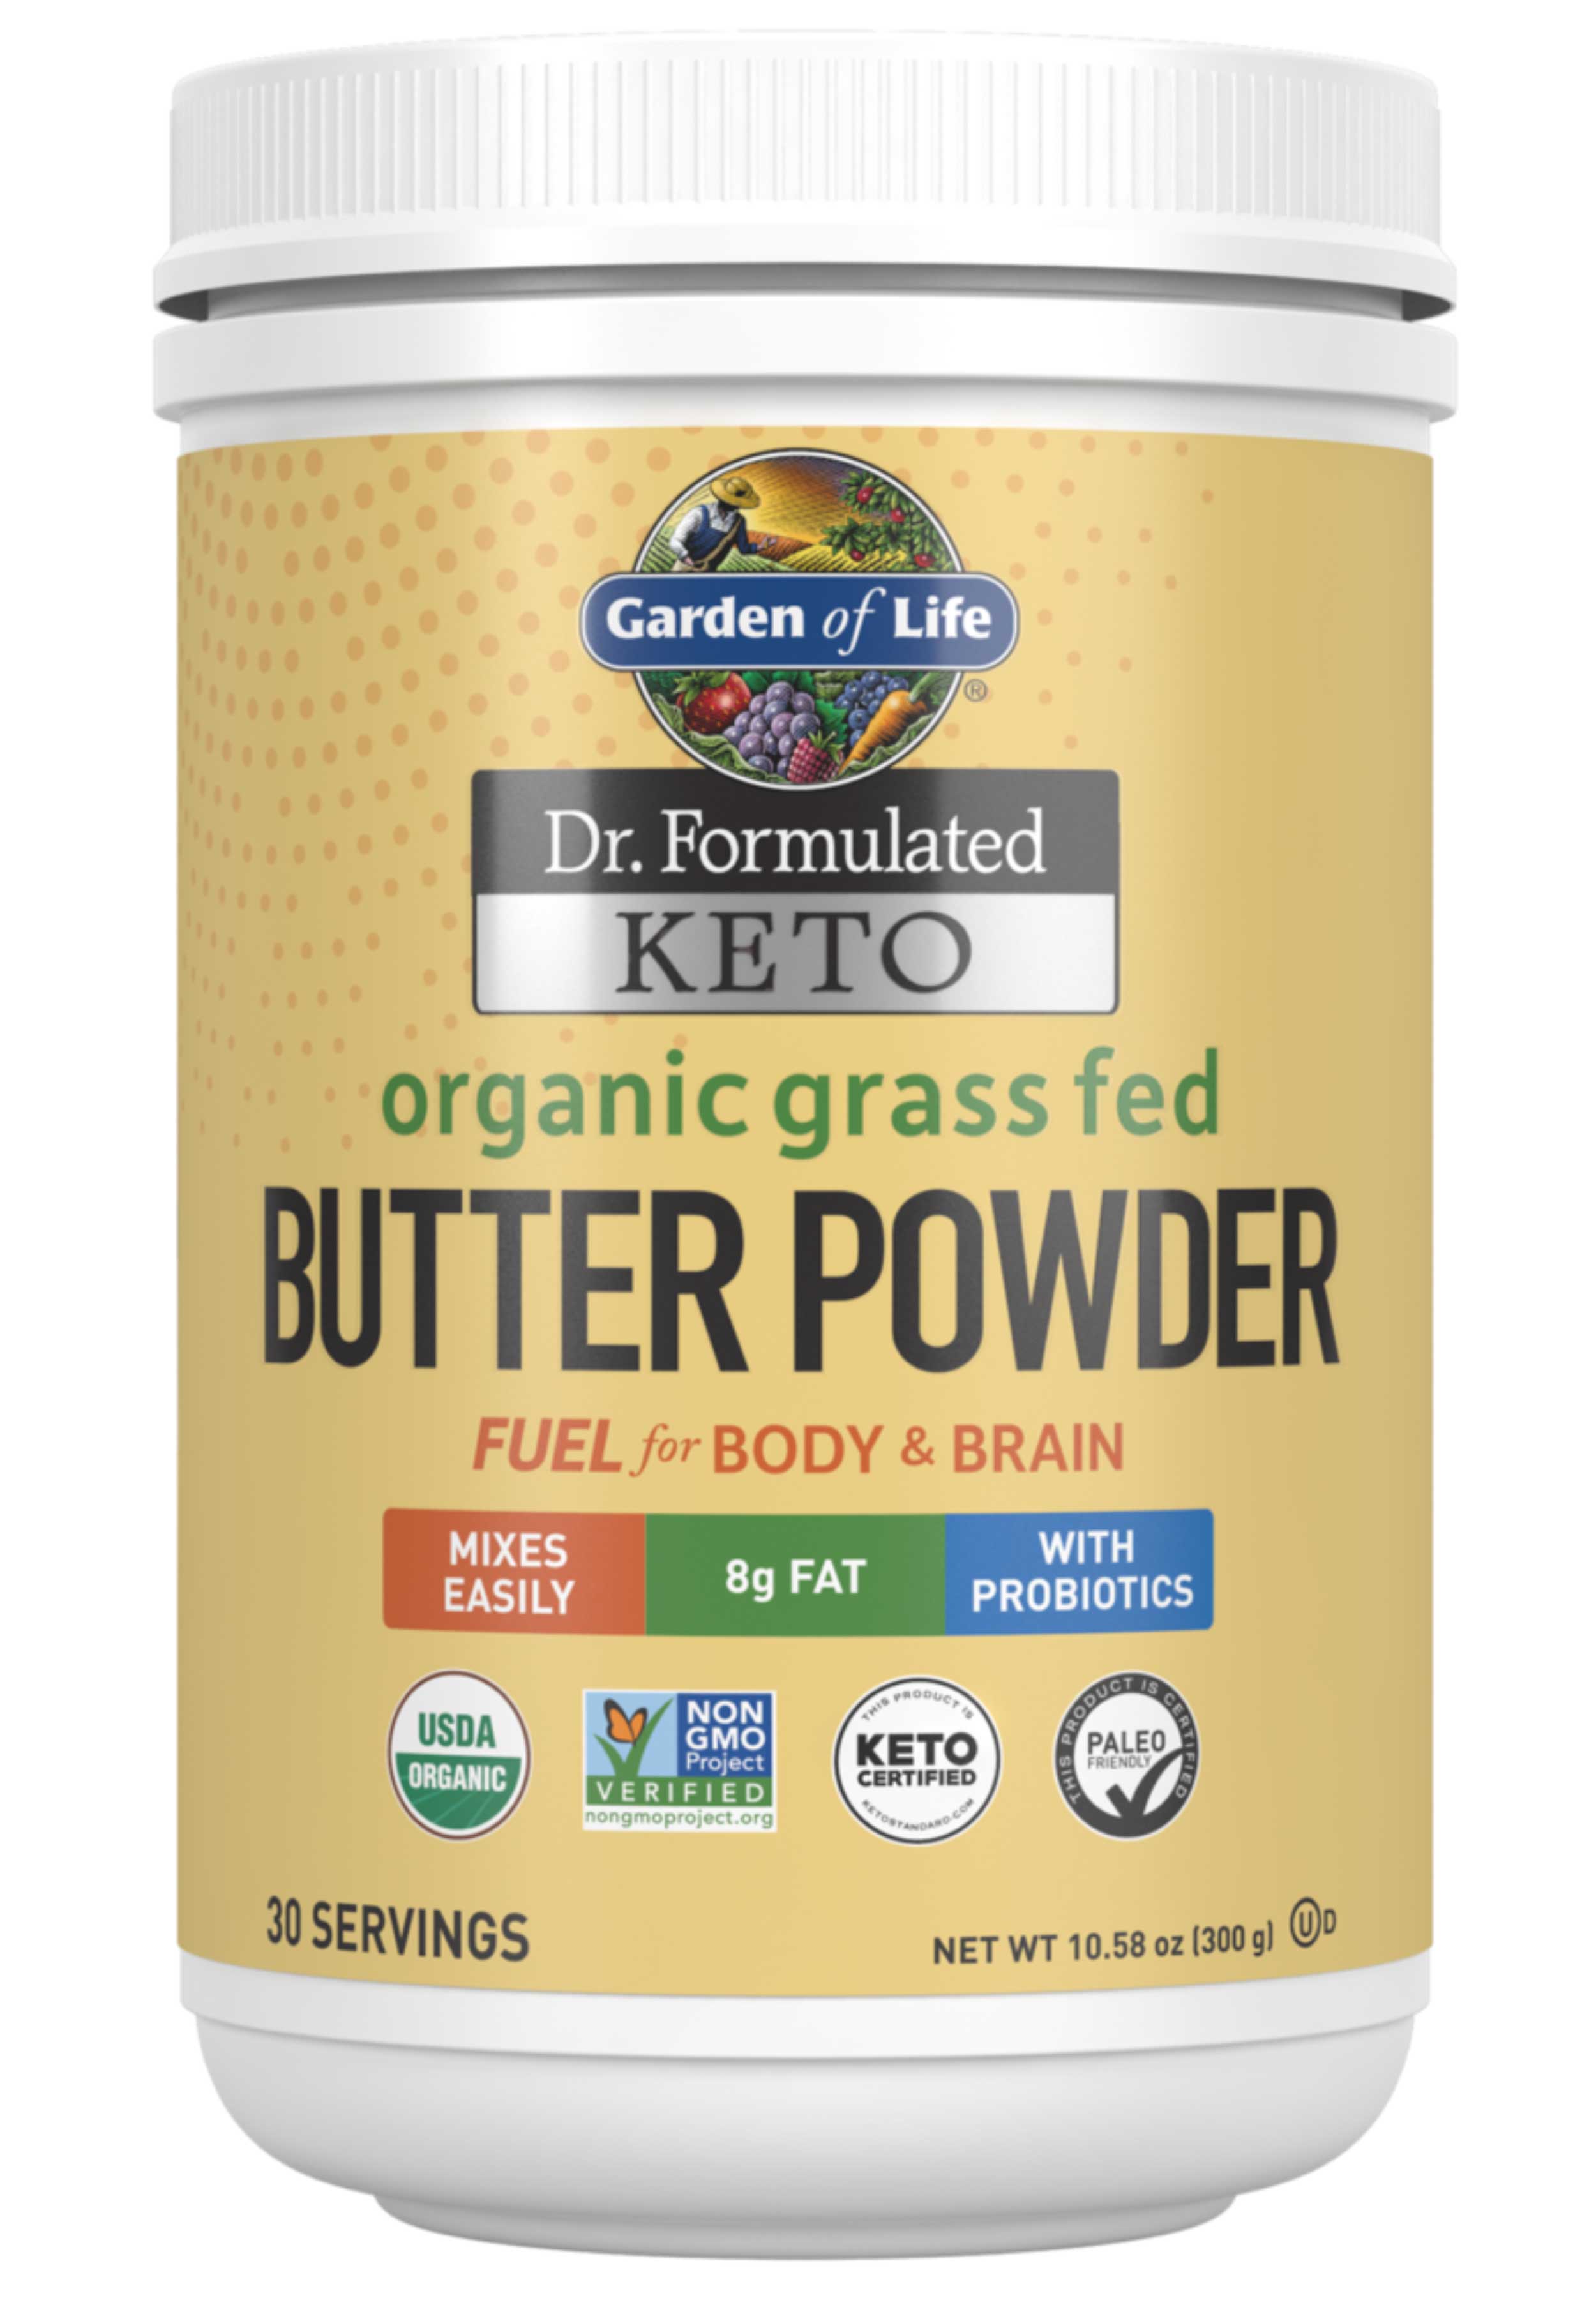 Garden of Life Dr. Formulated Keto Organic Grass Fed Butter Powder